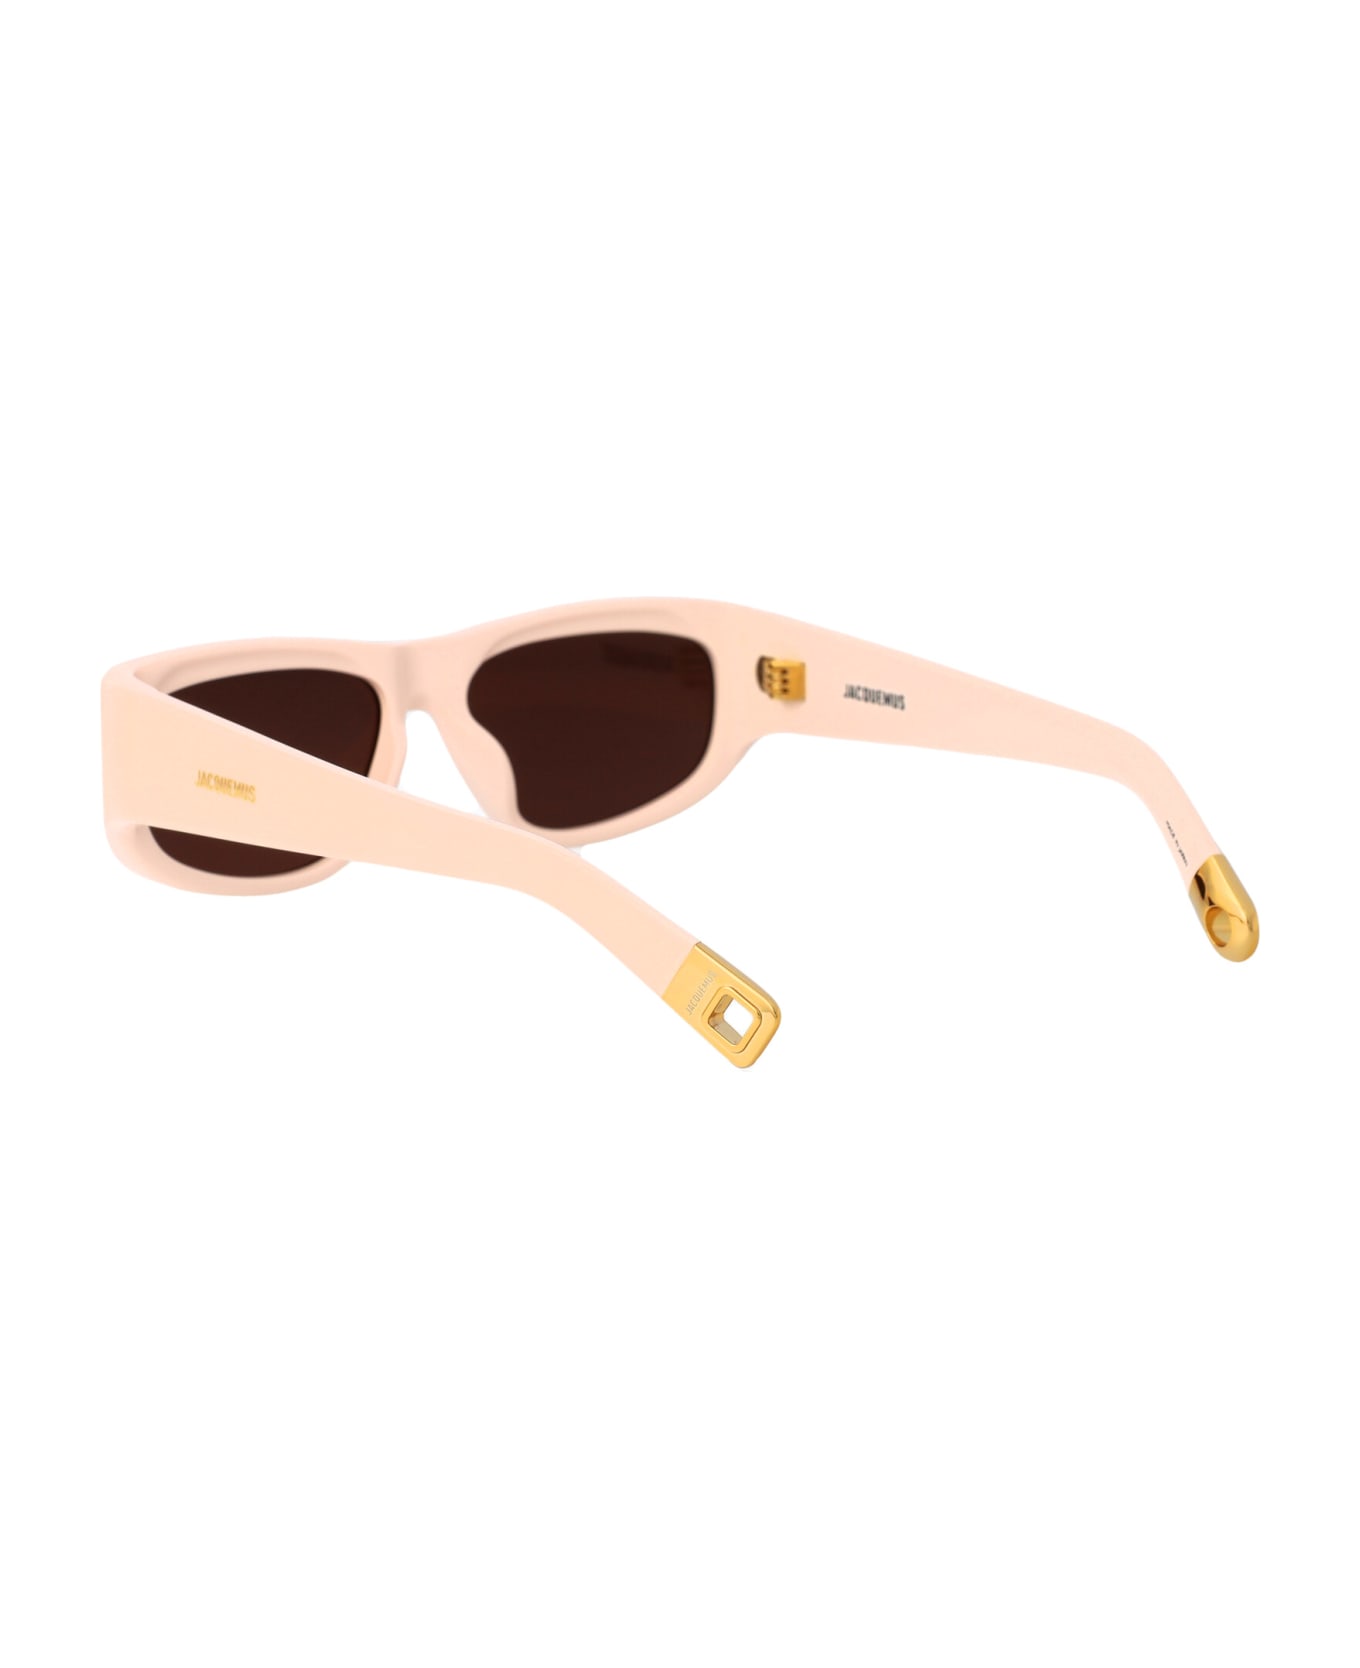 Jacquemus Pilota Sunglasses - 02 CREAM/ YELLOW GOLD/ BROWN サングラス